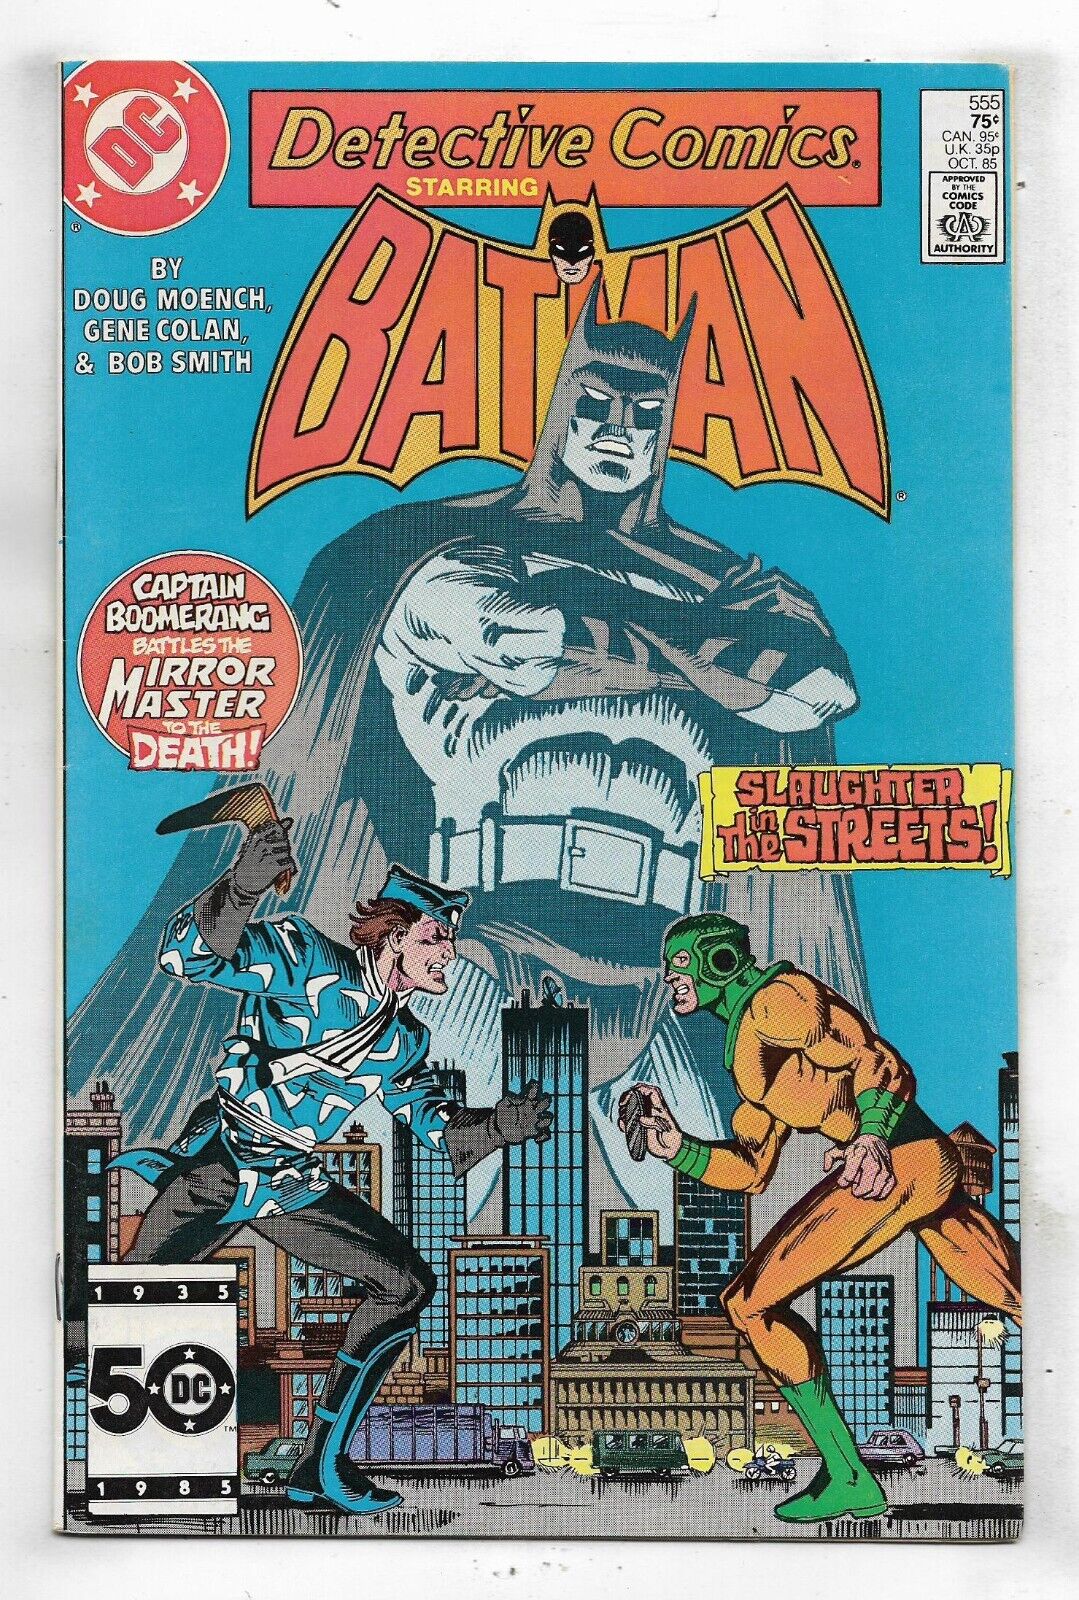 Detective Comics 1985 #555 Fine/Very Fine